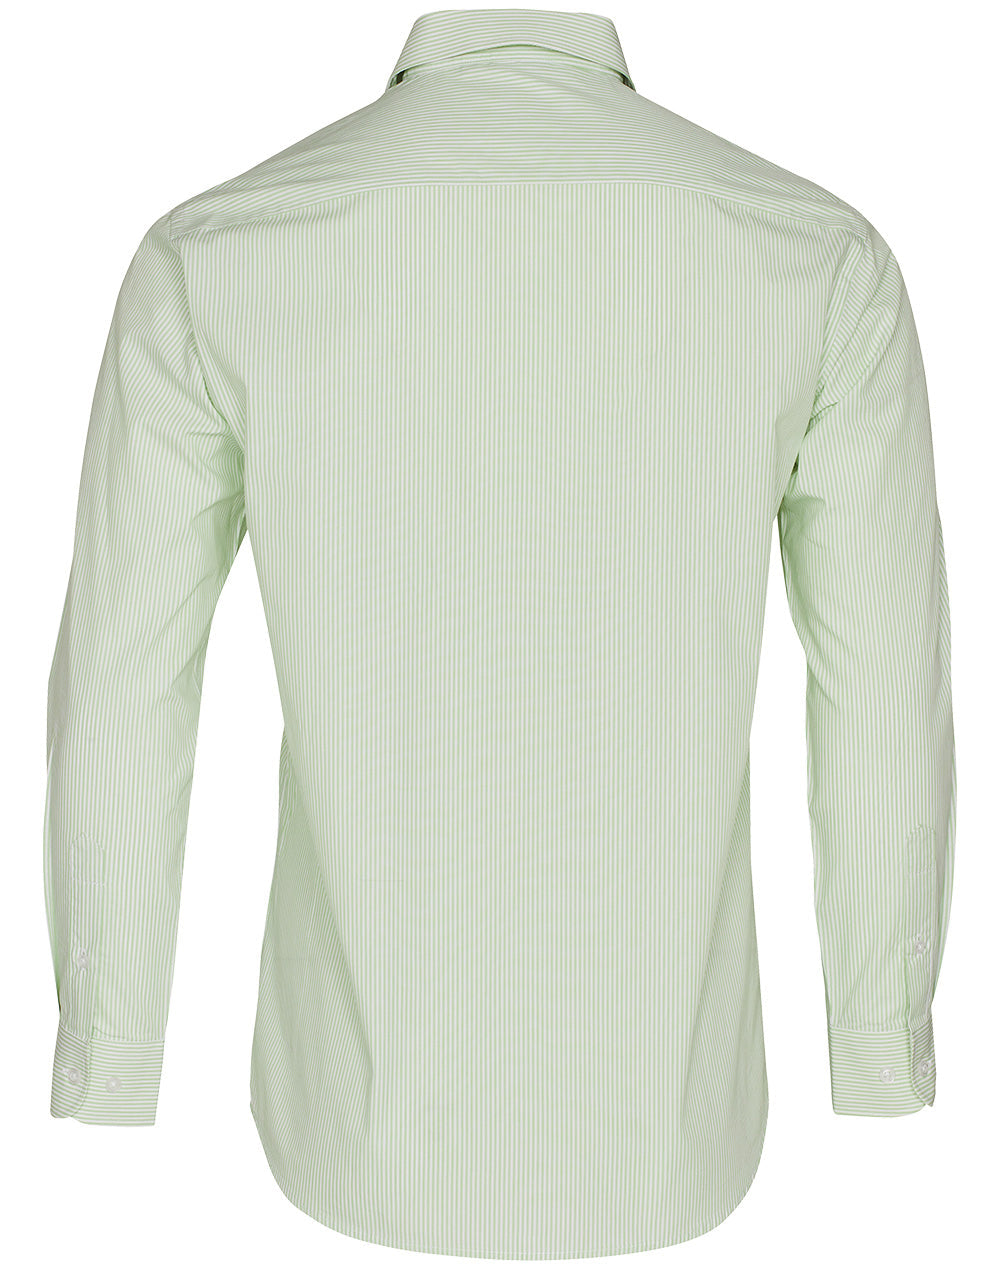 Benchmark M7232 Men's Balance Stripe Long Sleeve Shirt